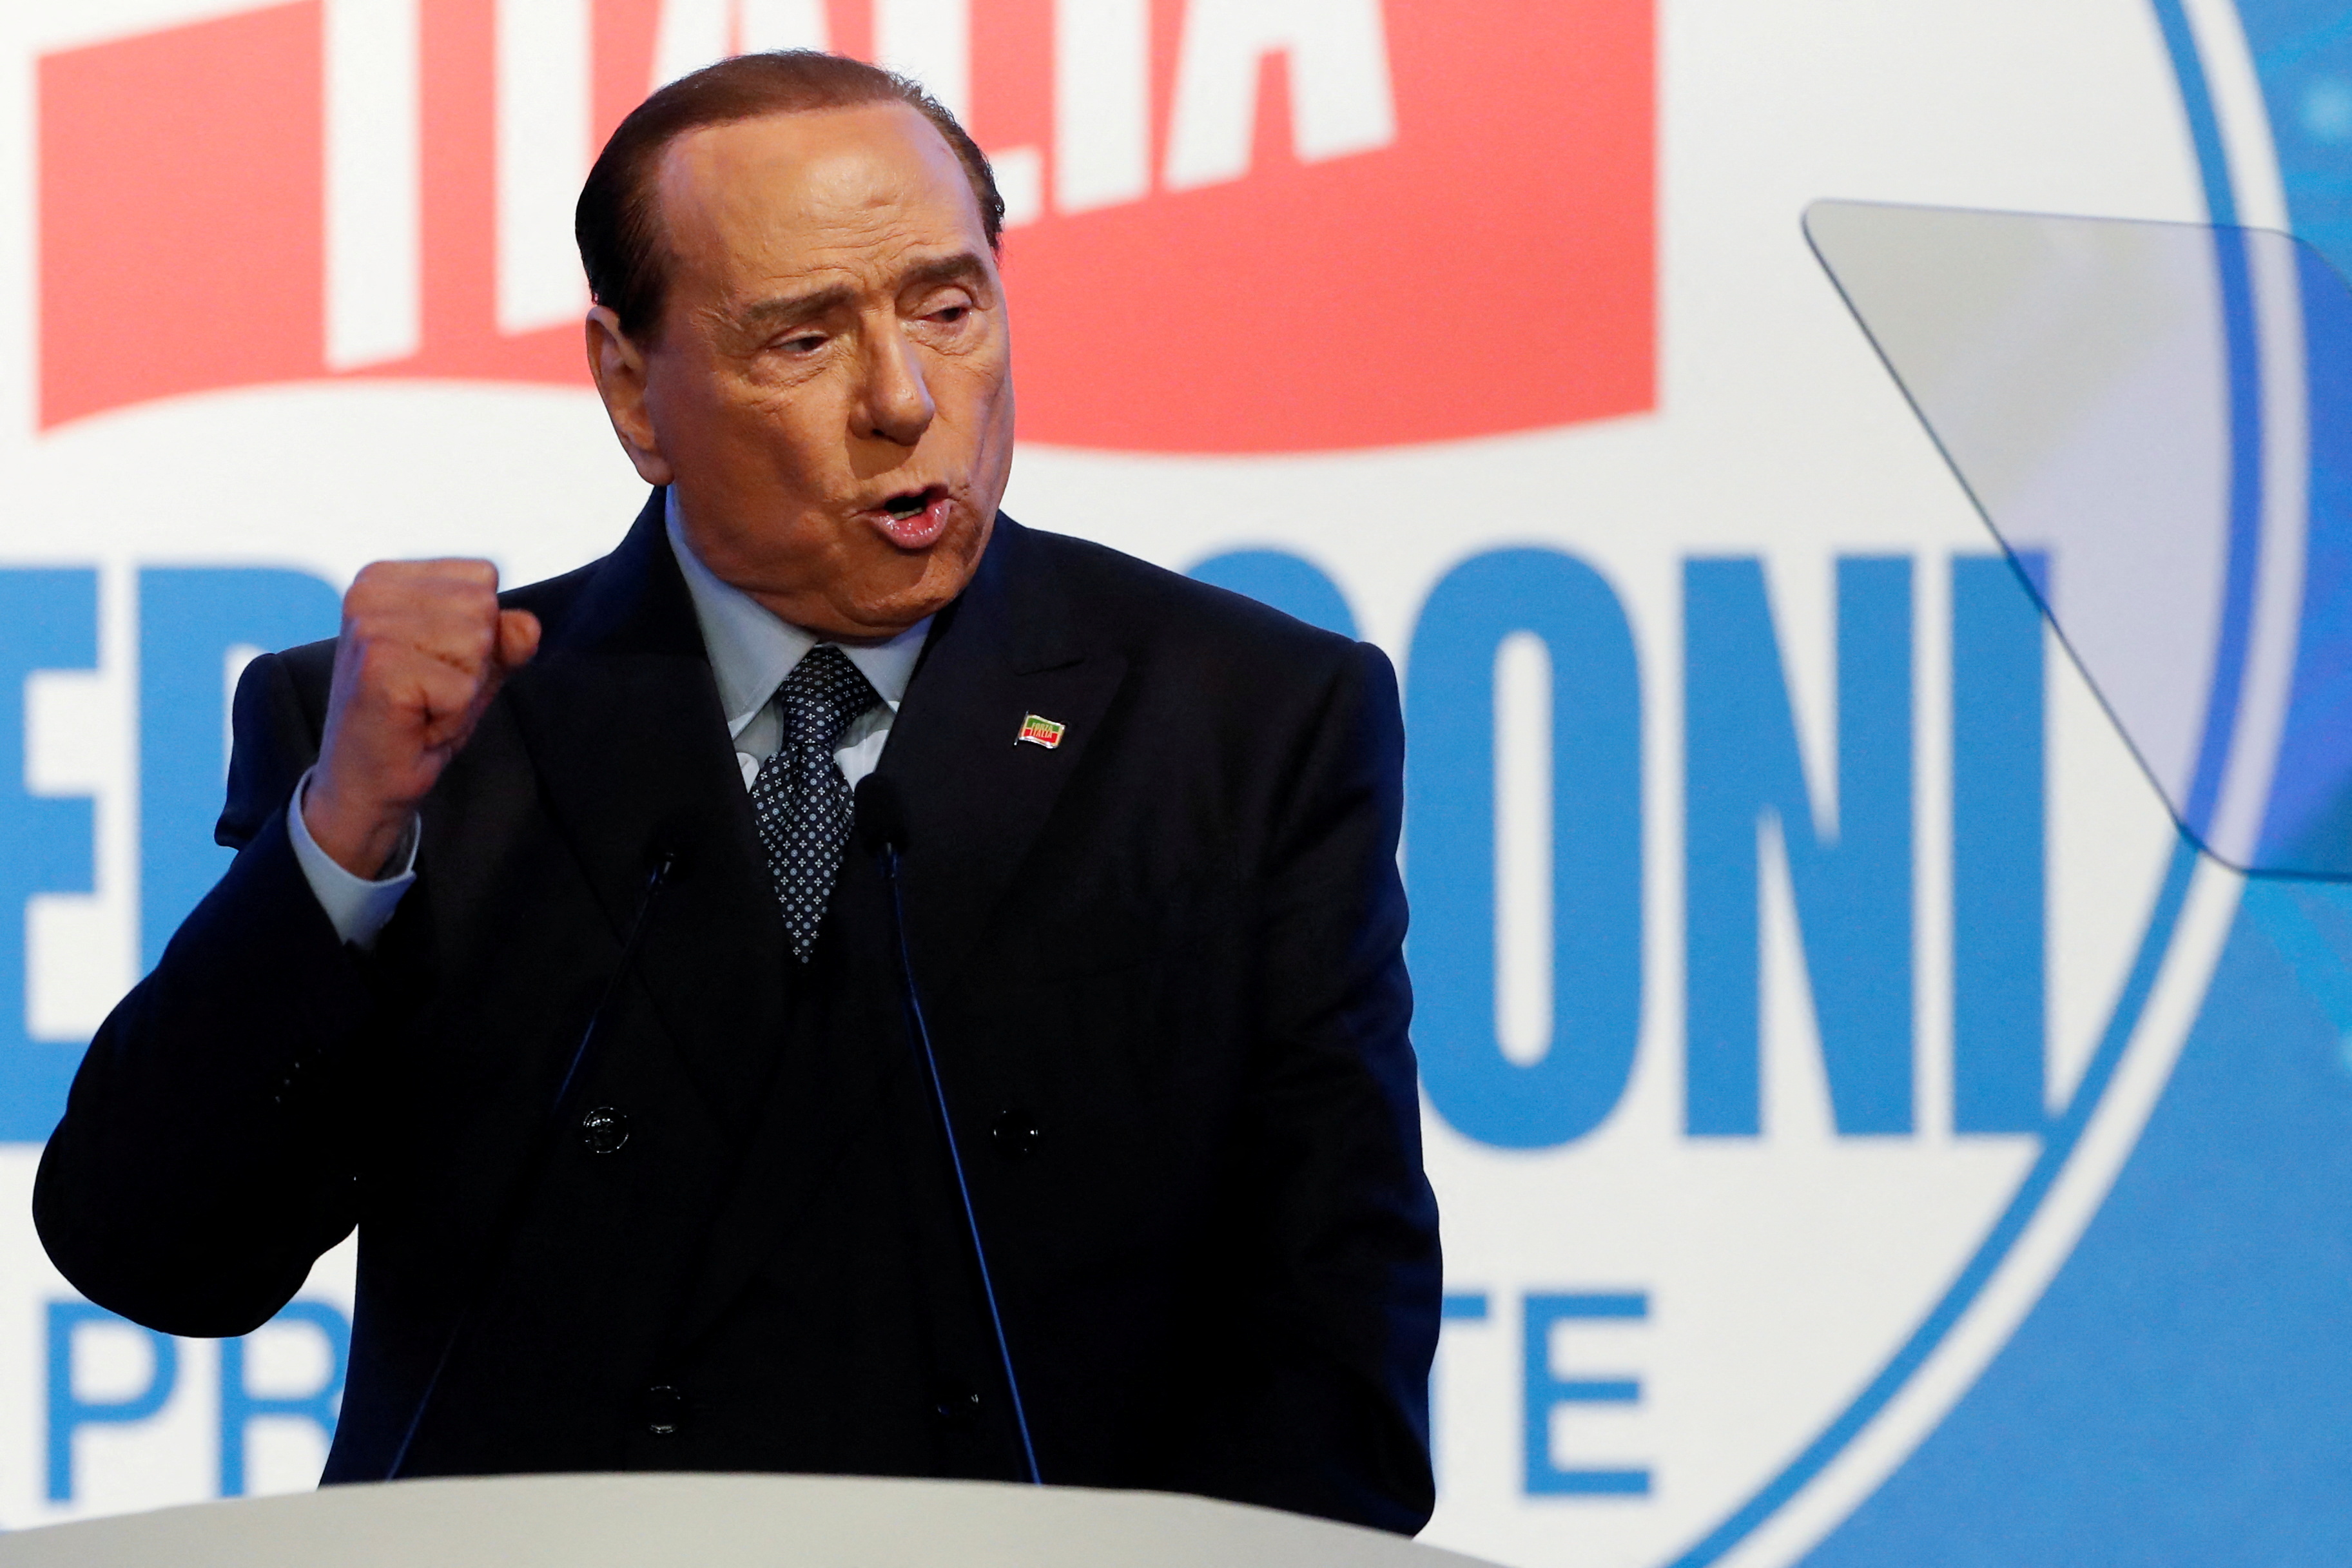 Former Italian PM Berlusconi attends a rally in Rome